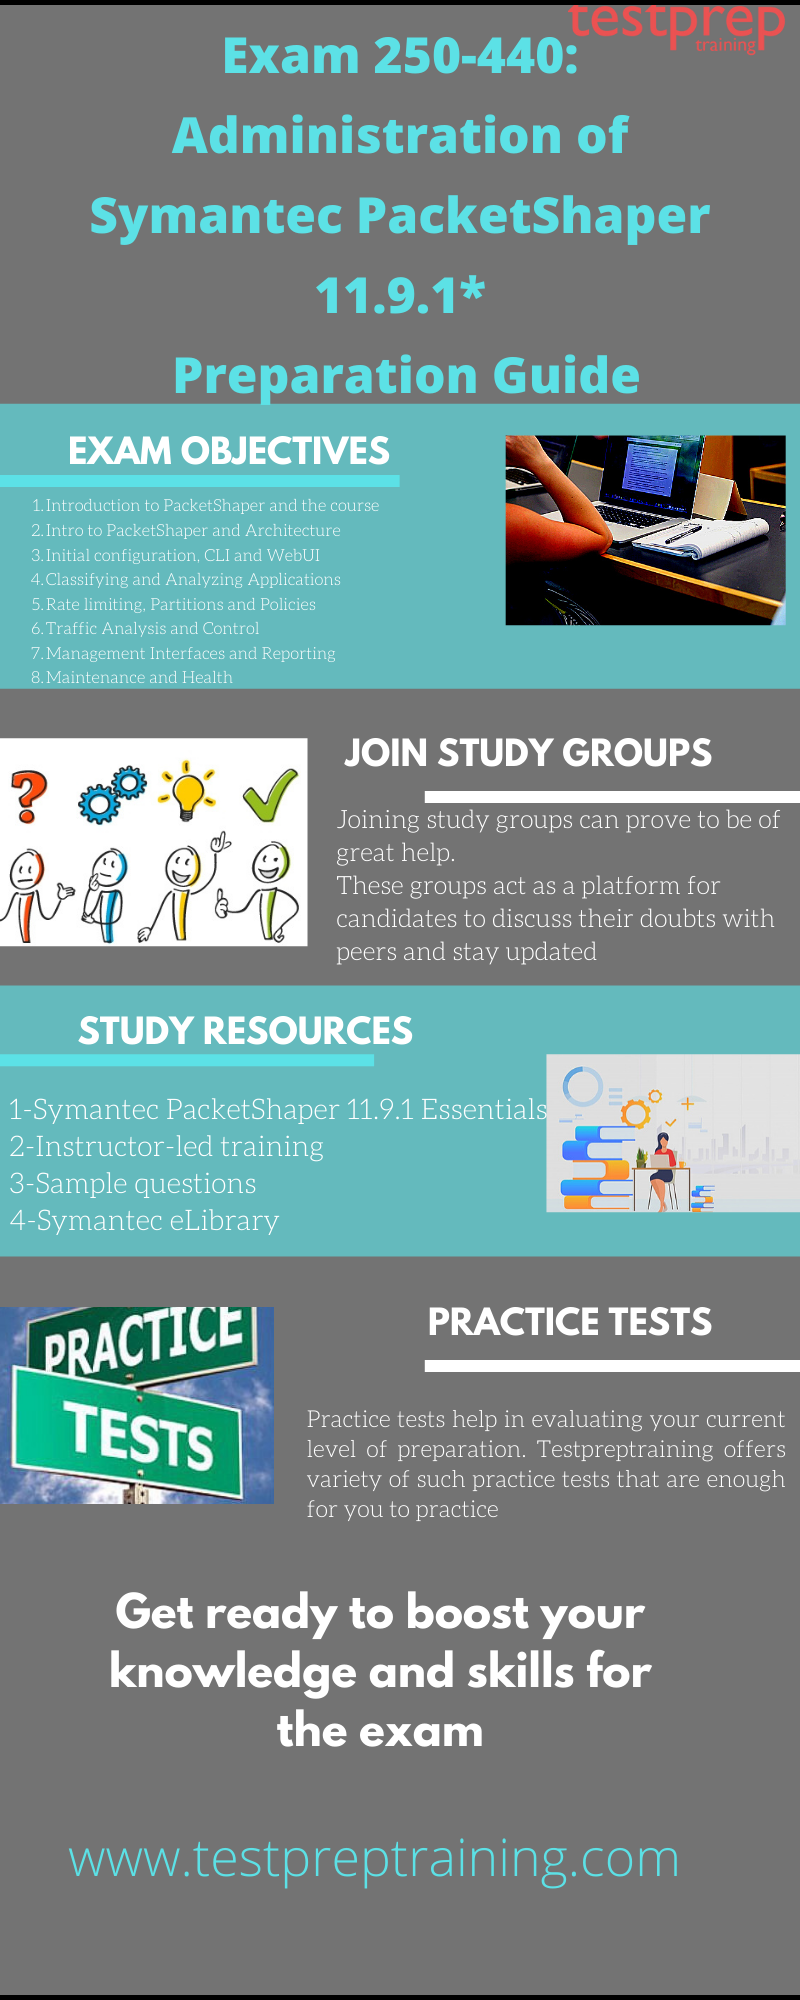 Exam 250-440: Administration of Symantec PacketShaper 11.9.1* preparation guide